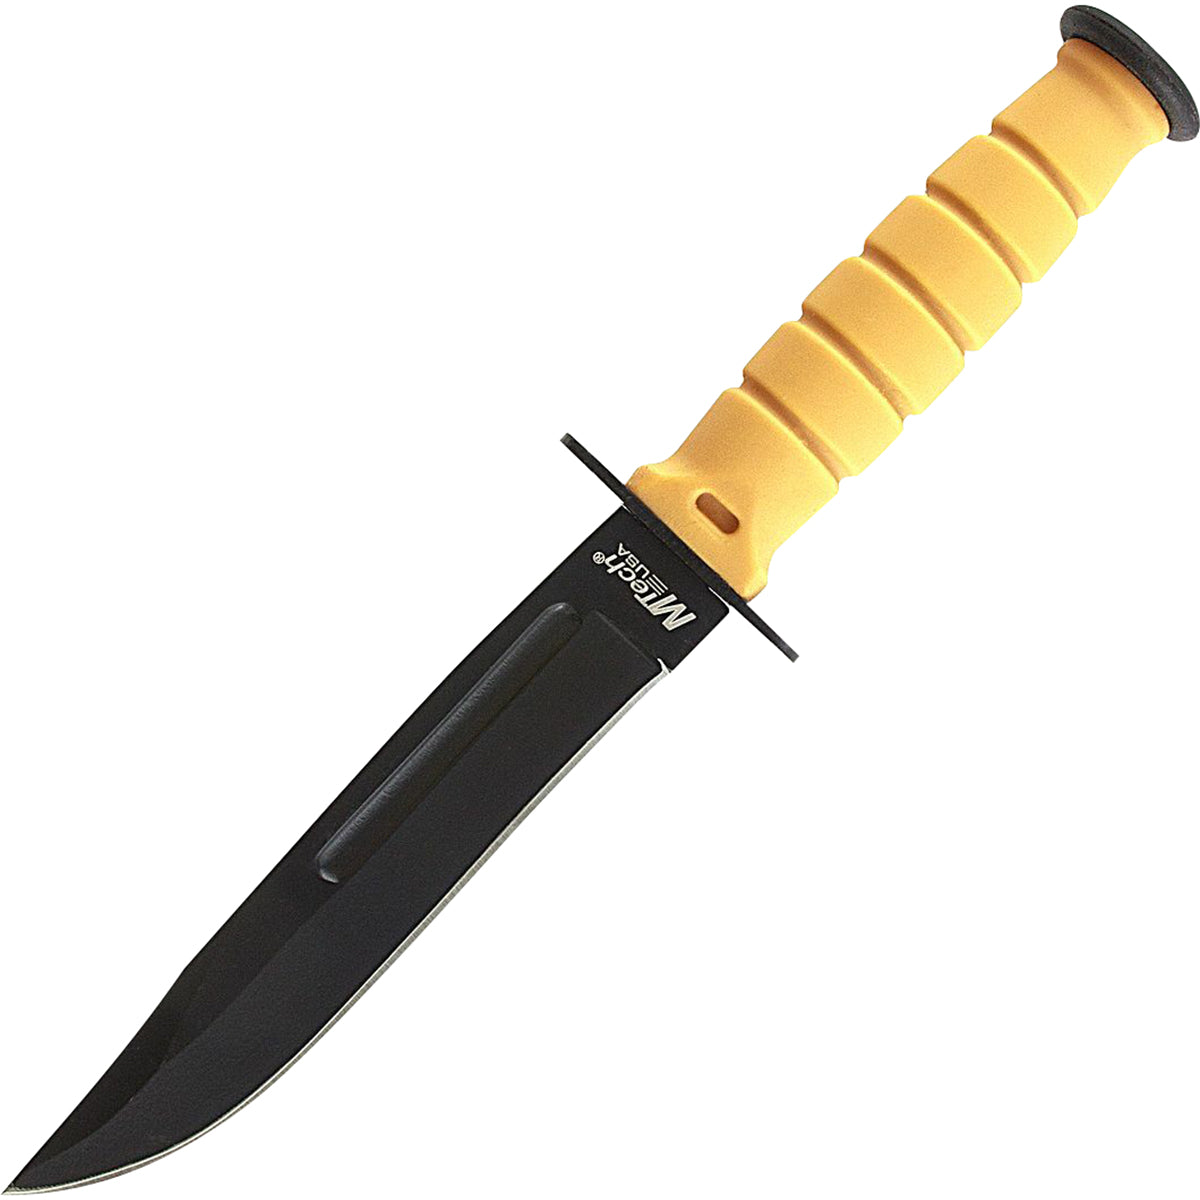 MTech USA Tactical Kabai Fixed Blade Bowie Neck Knife, 6" Overall, Tan, MT-632DT M-Tech